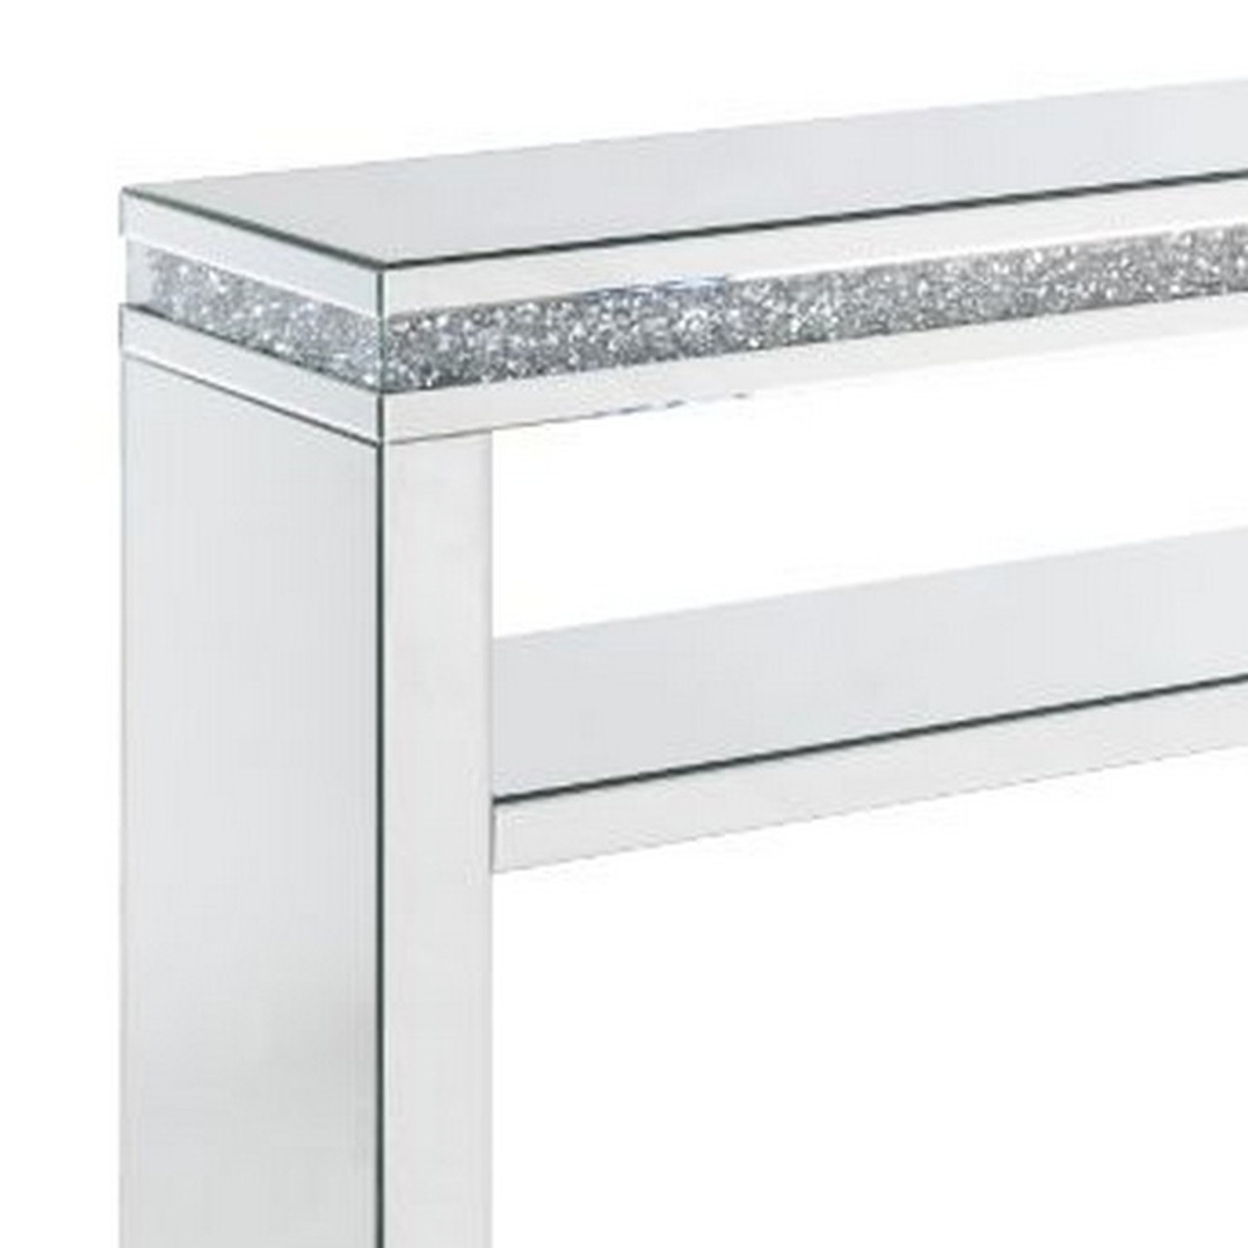 Sofa Table With Mirror Panel Frame And 1 Glass Shelf, Silver- Saltoro Sherpi